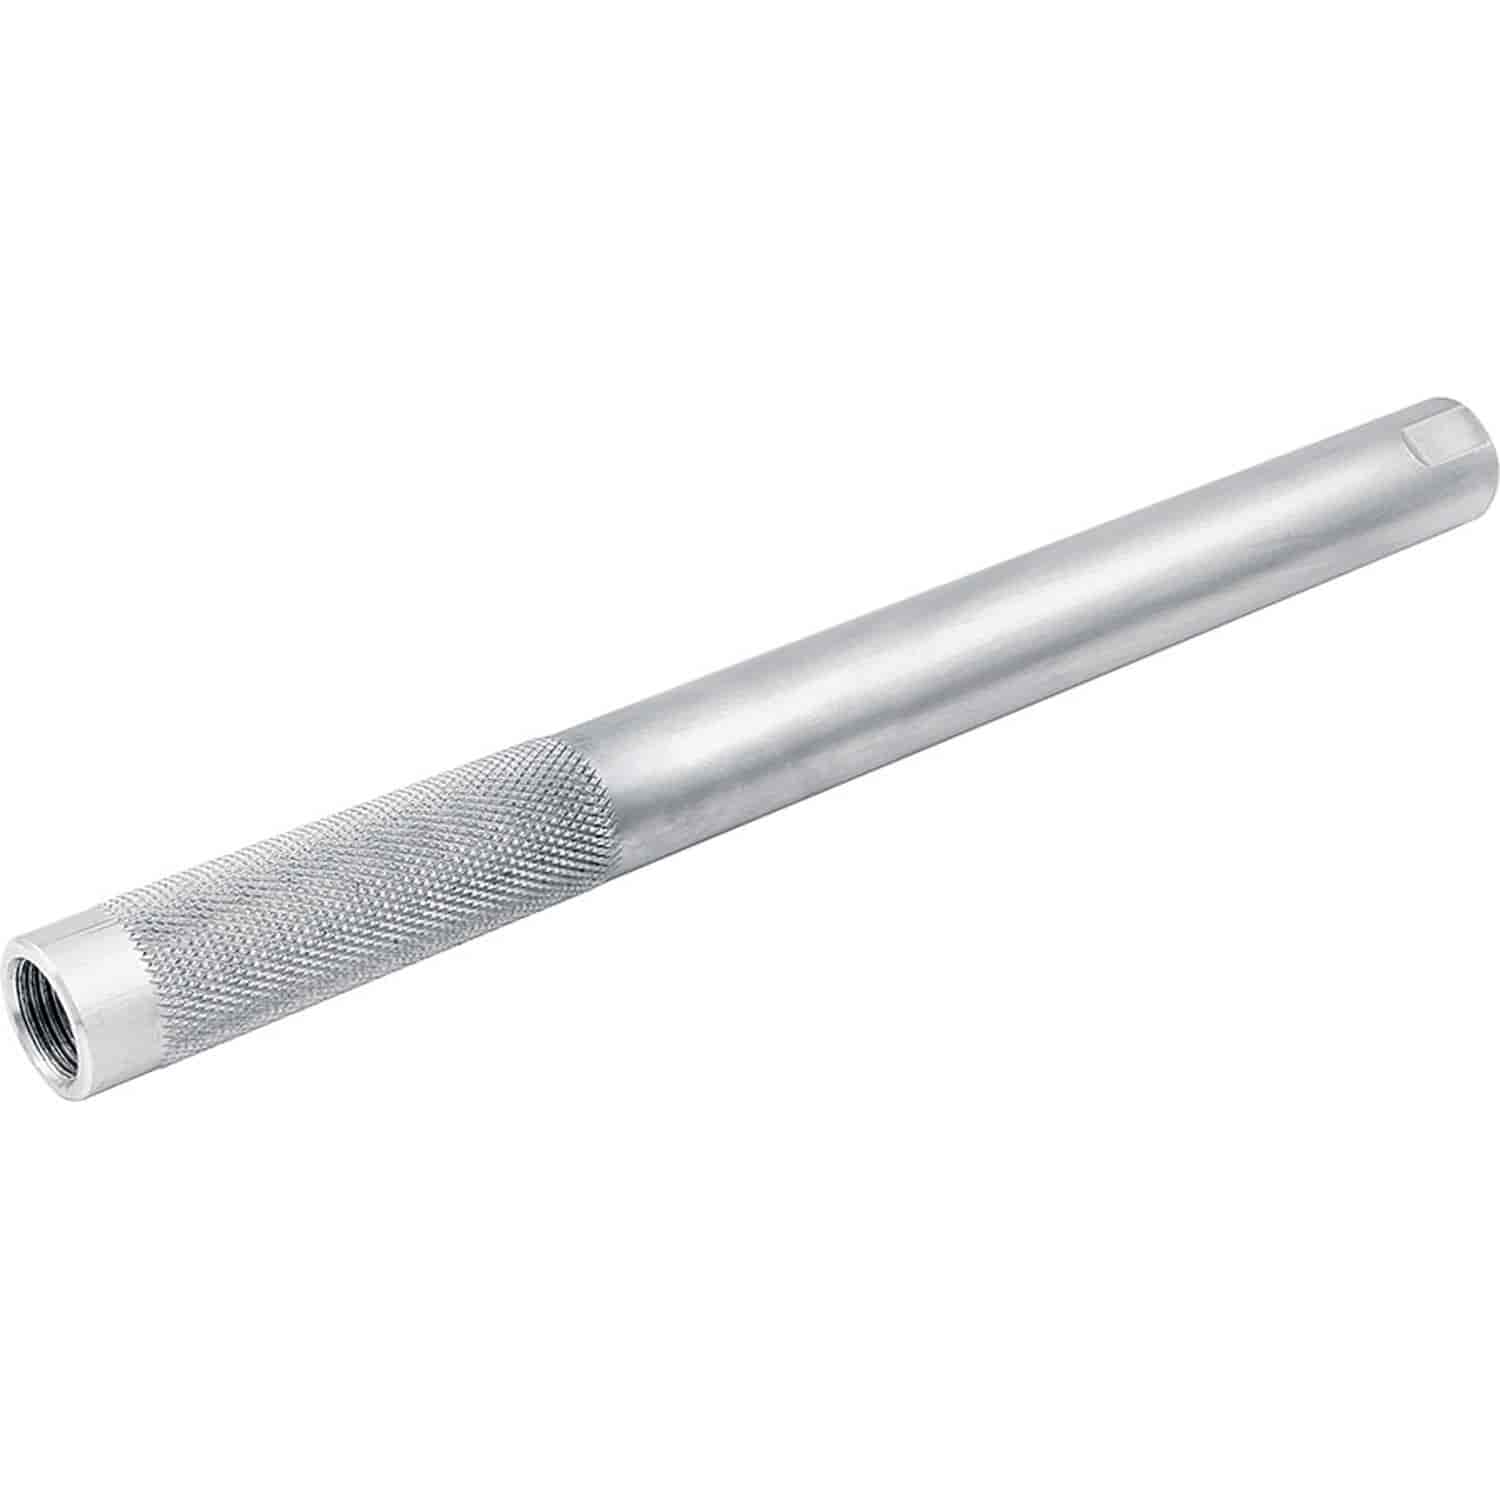 Swedged Aluminum Tie Rod Tube Length: 25"